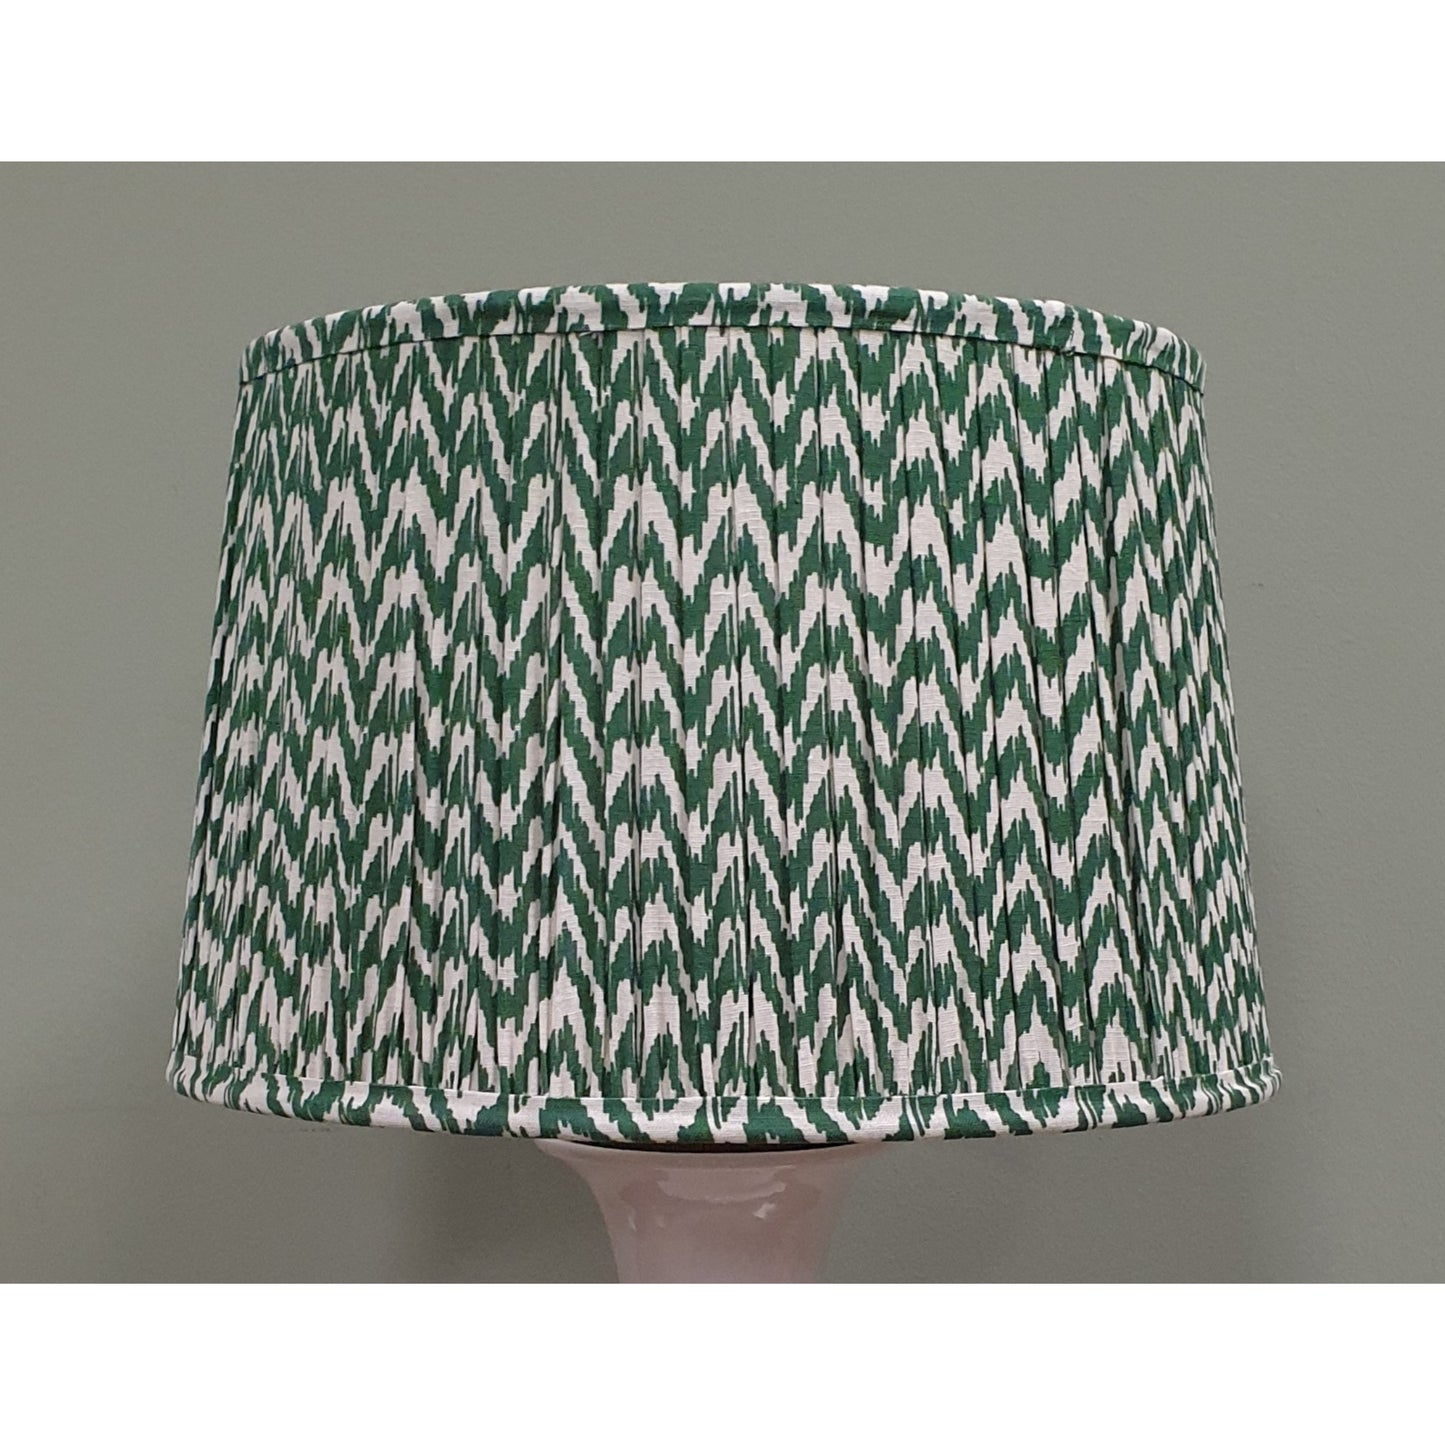 Striped Lamp Shade - Green